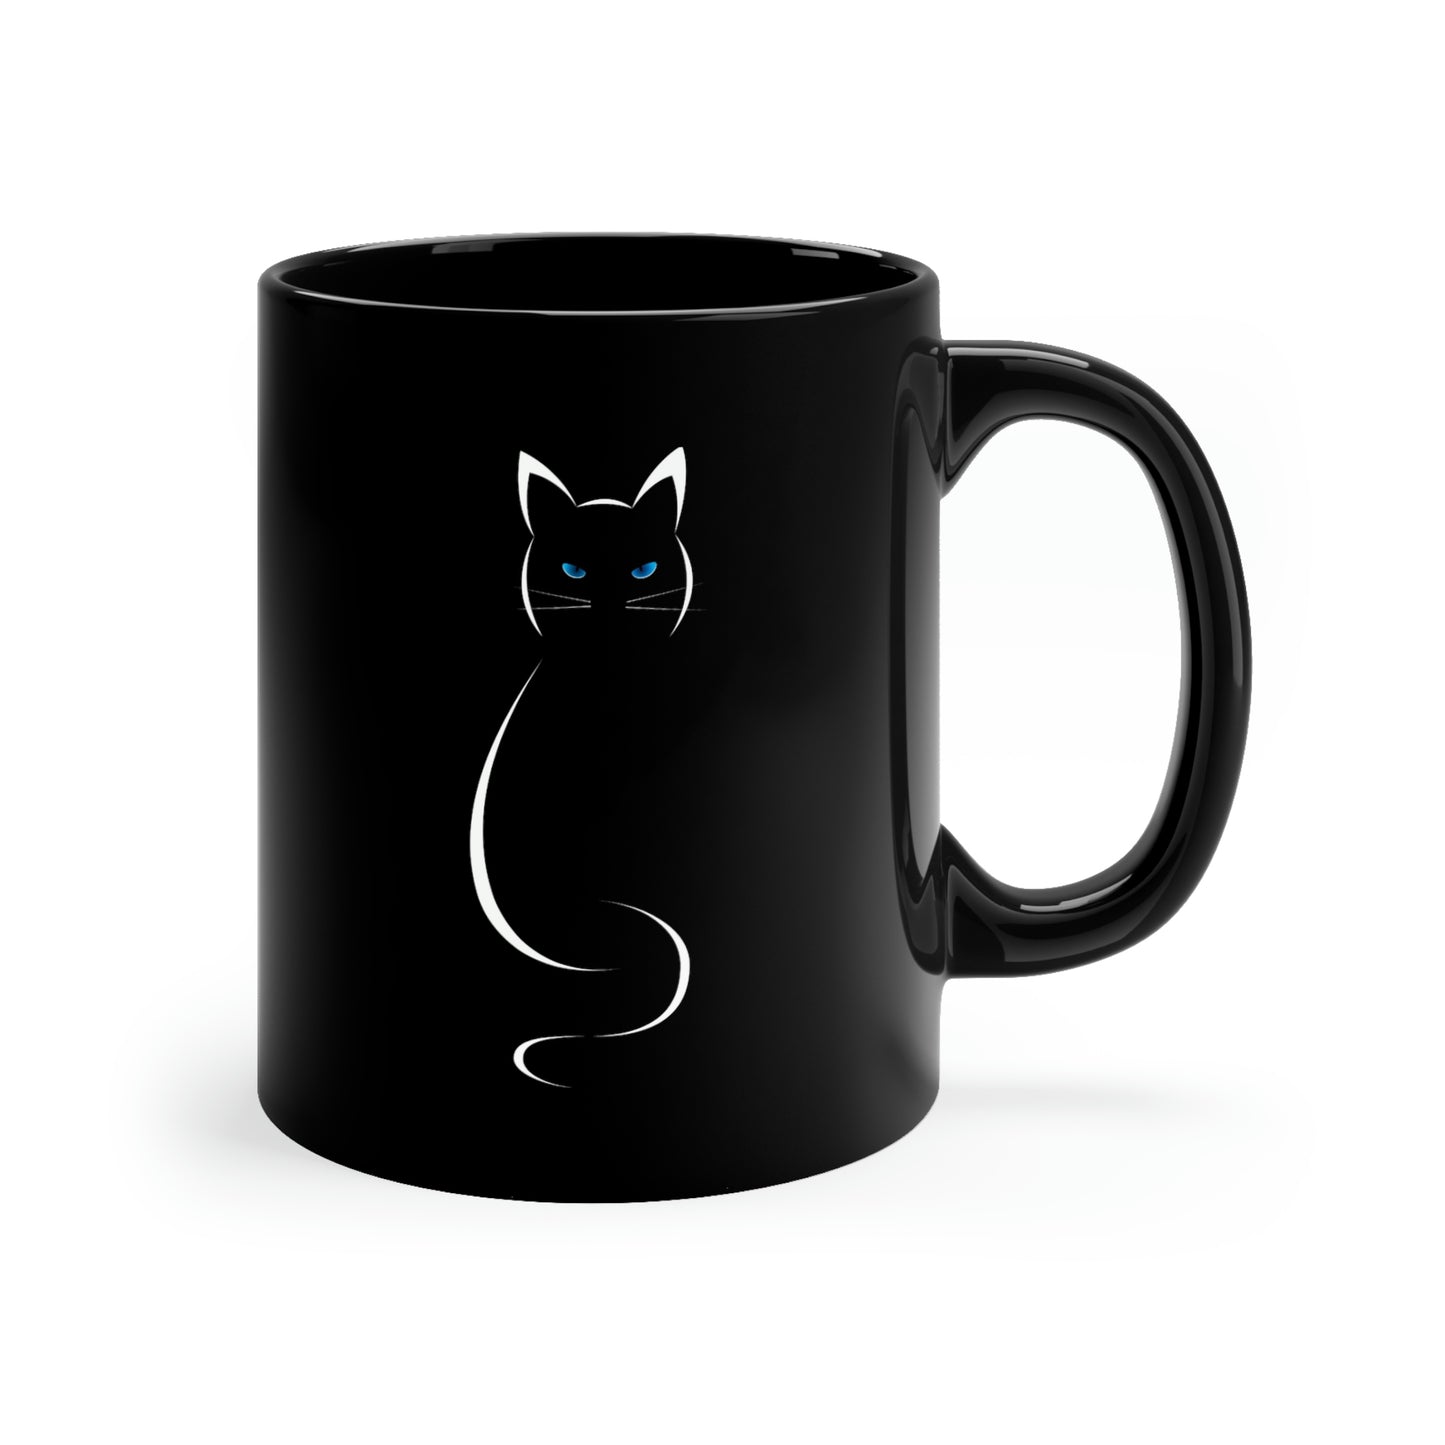 Cats Over Brats Mug